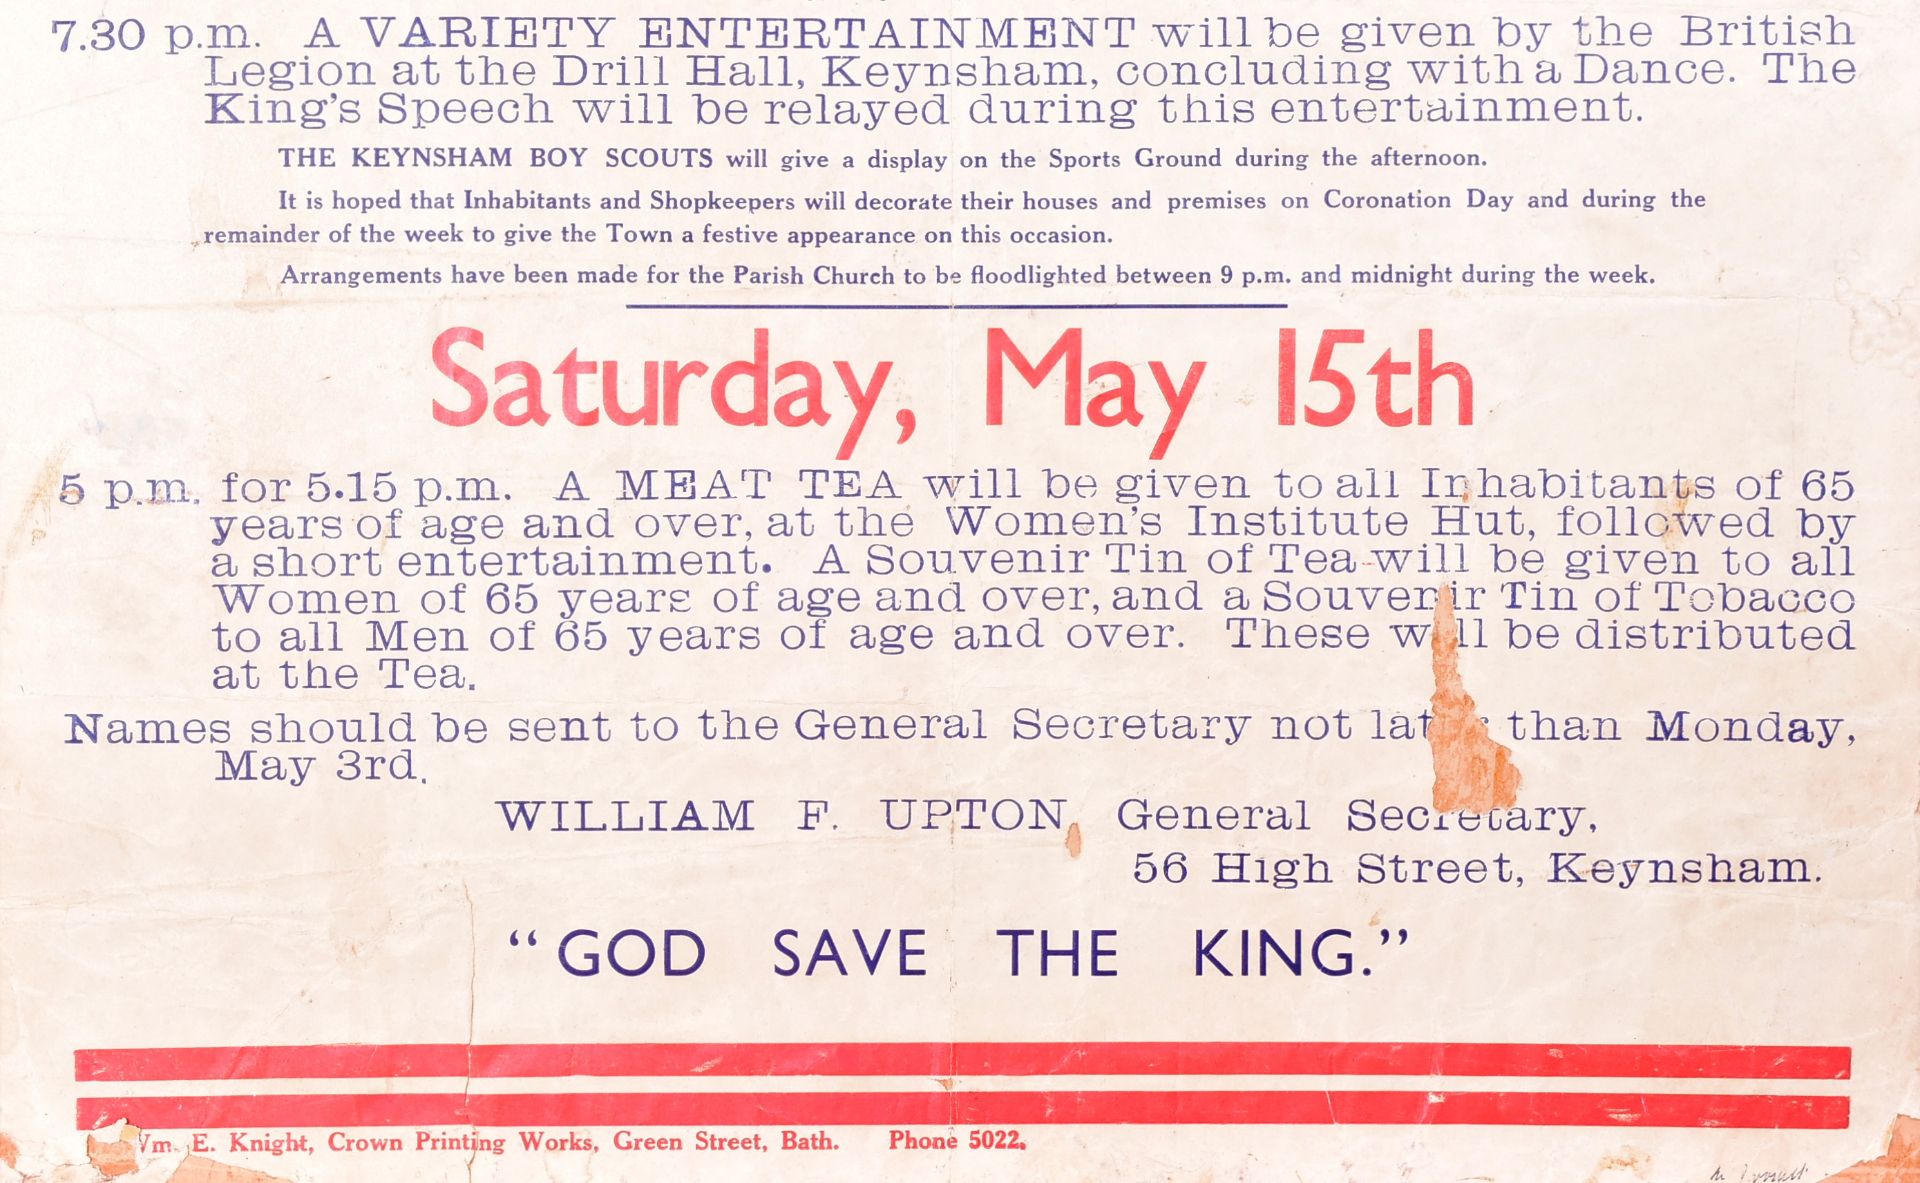 LOCAL INTEREST - 1937 KING GEORGE VI CORONATION PARTY KEYNSHAM - Image 5 of 5